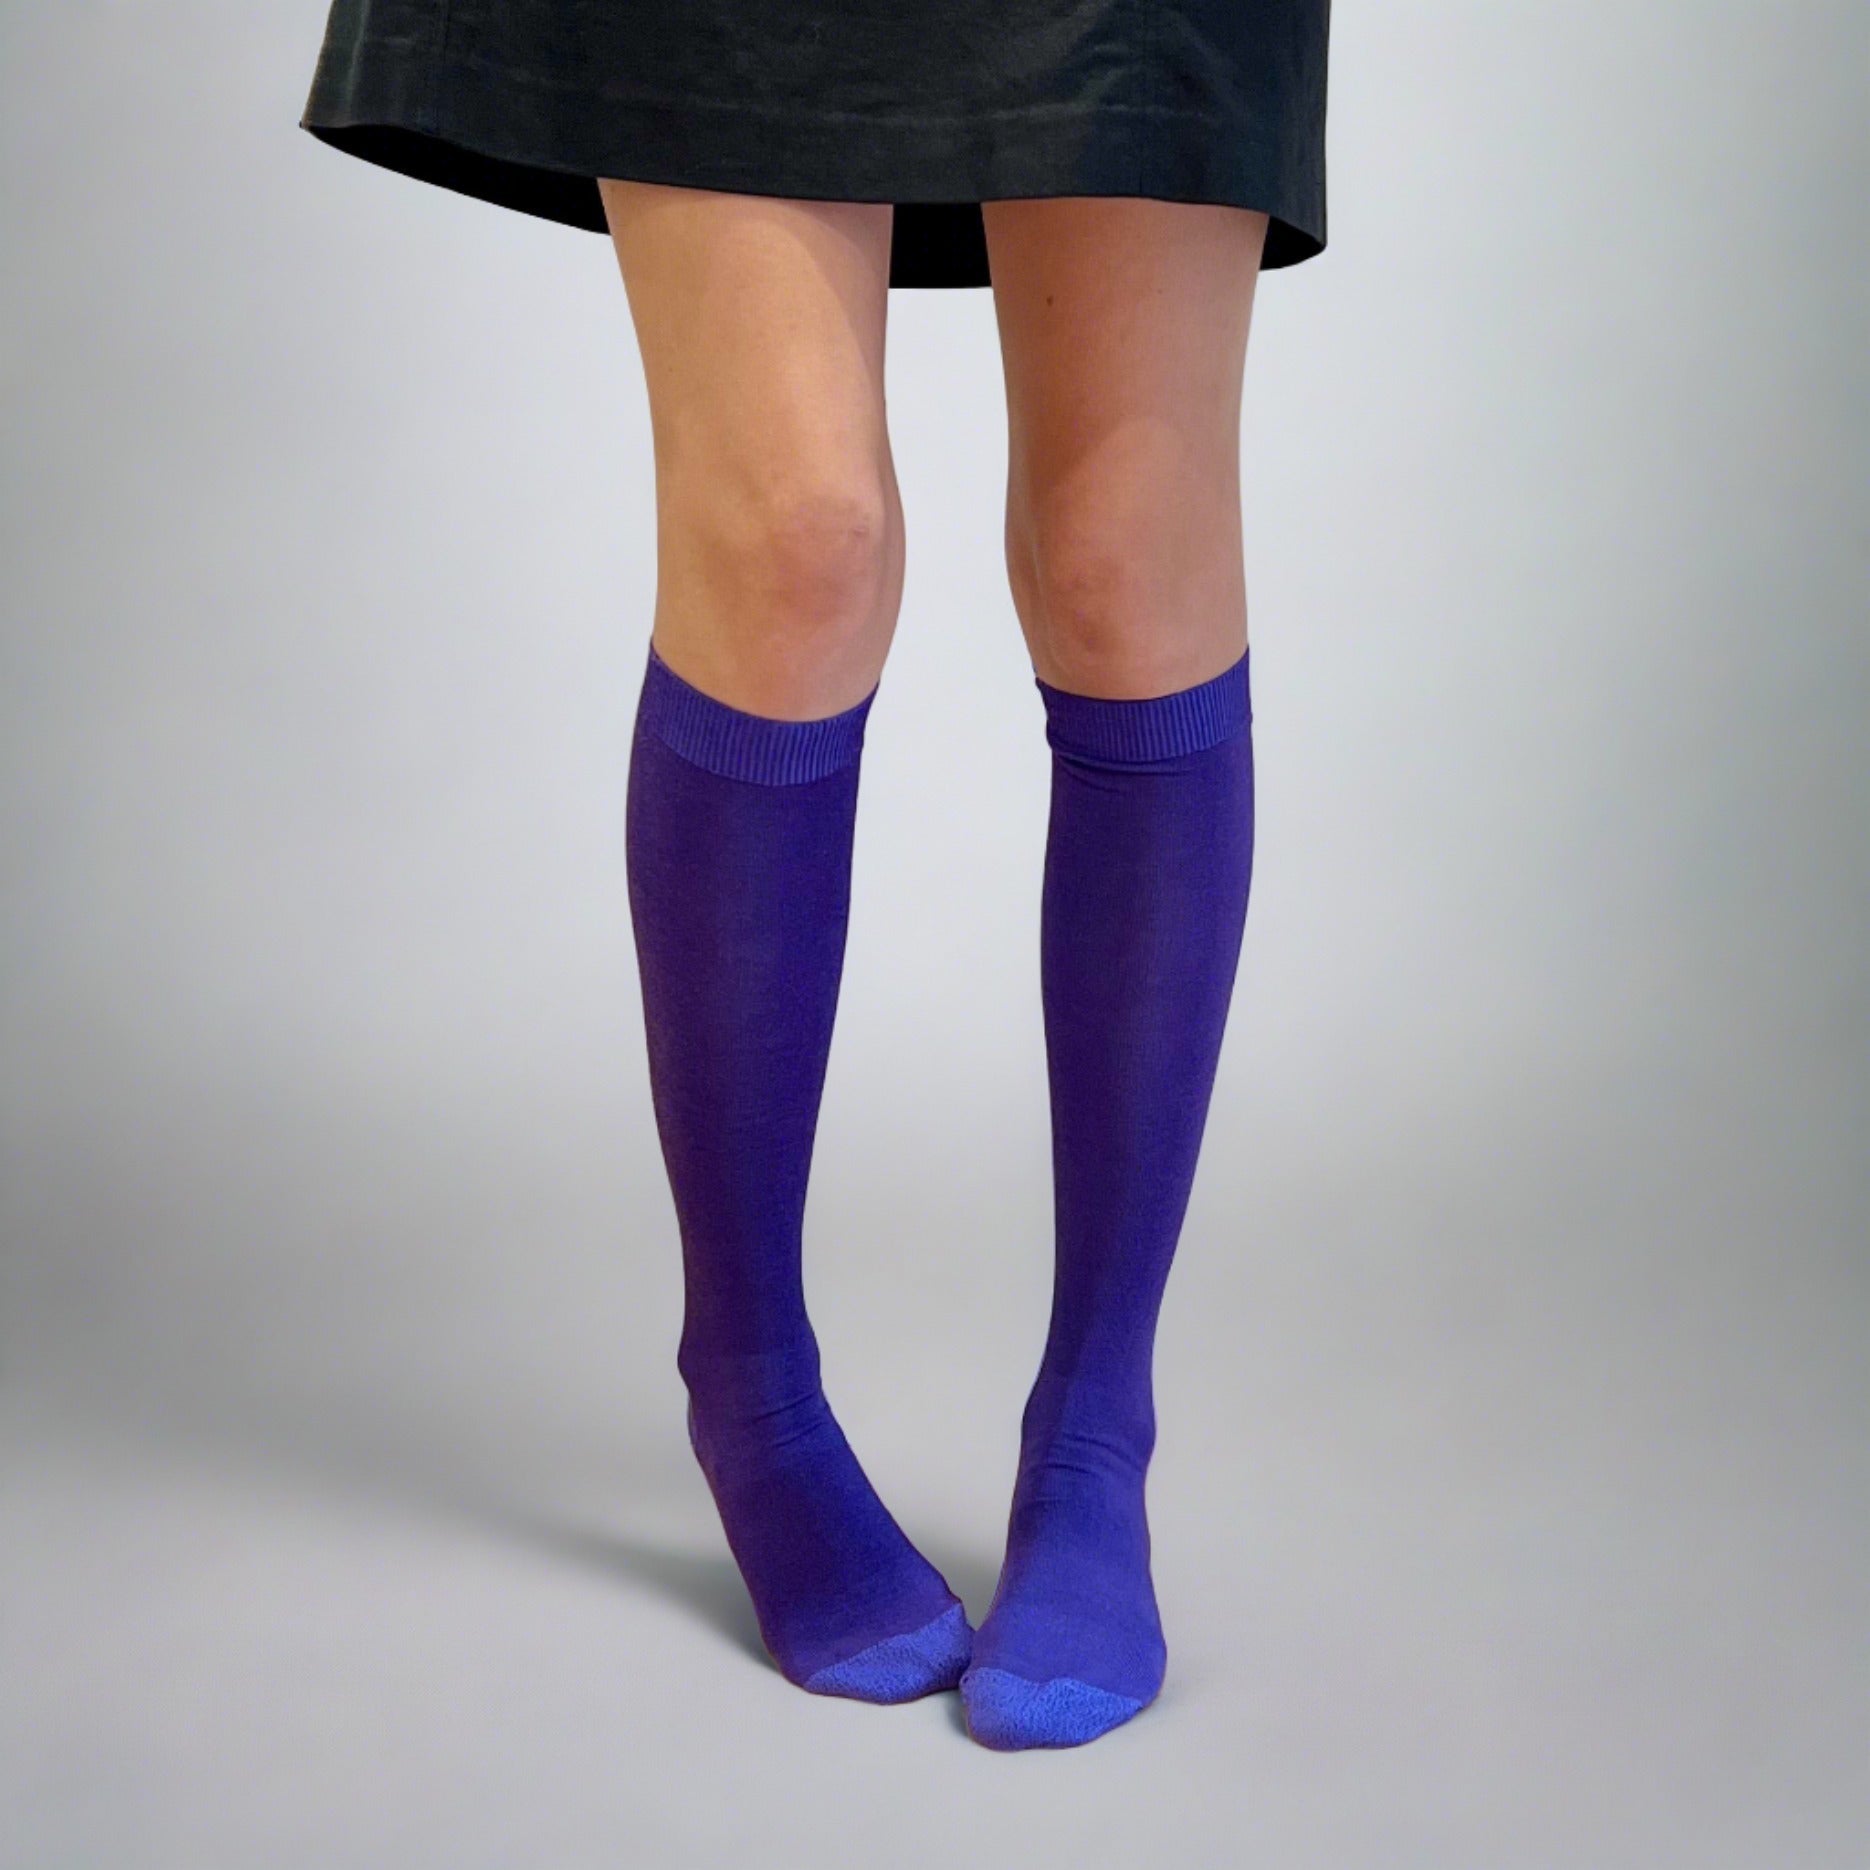 lady wearing ultraviolet knee high wool socks - The Sockery